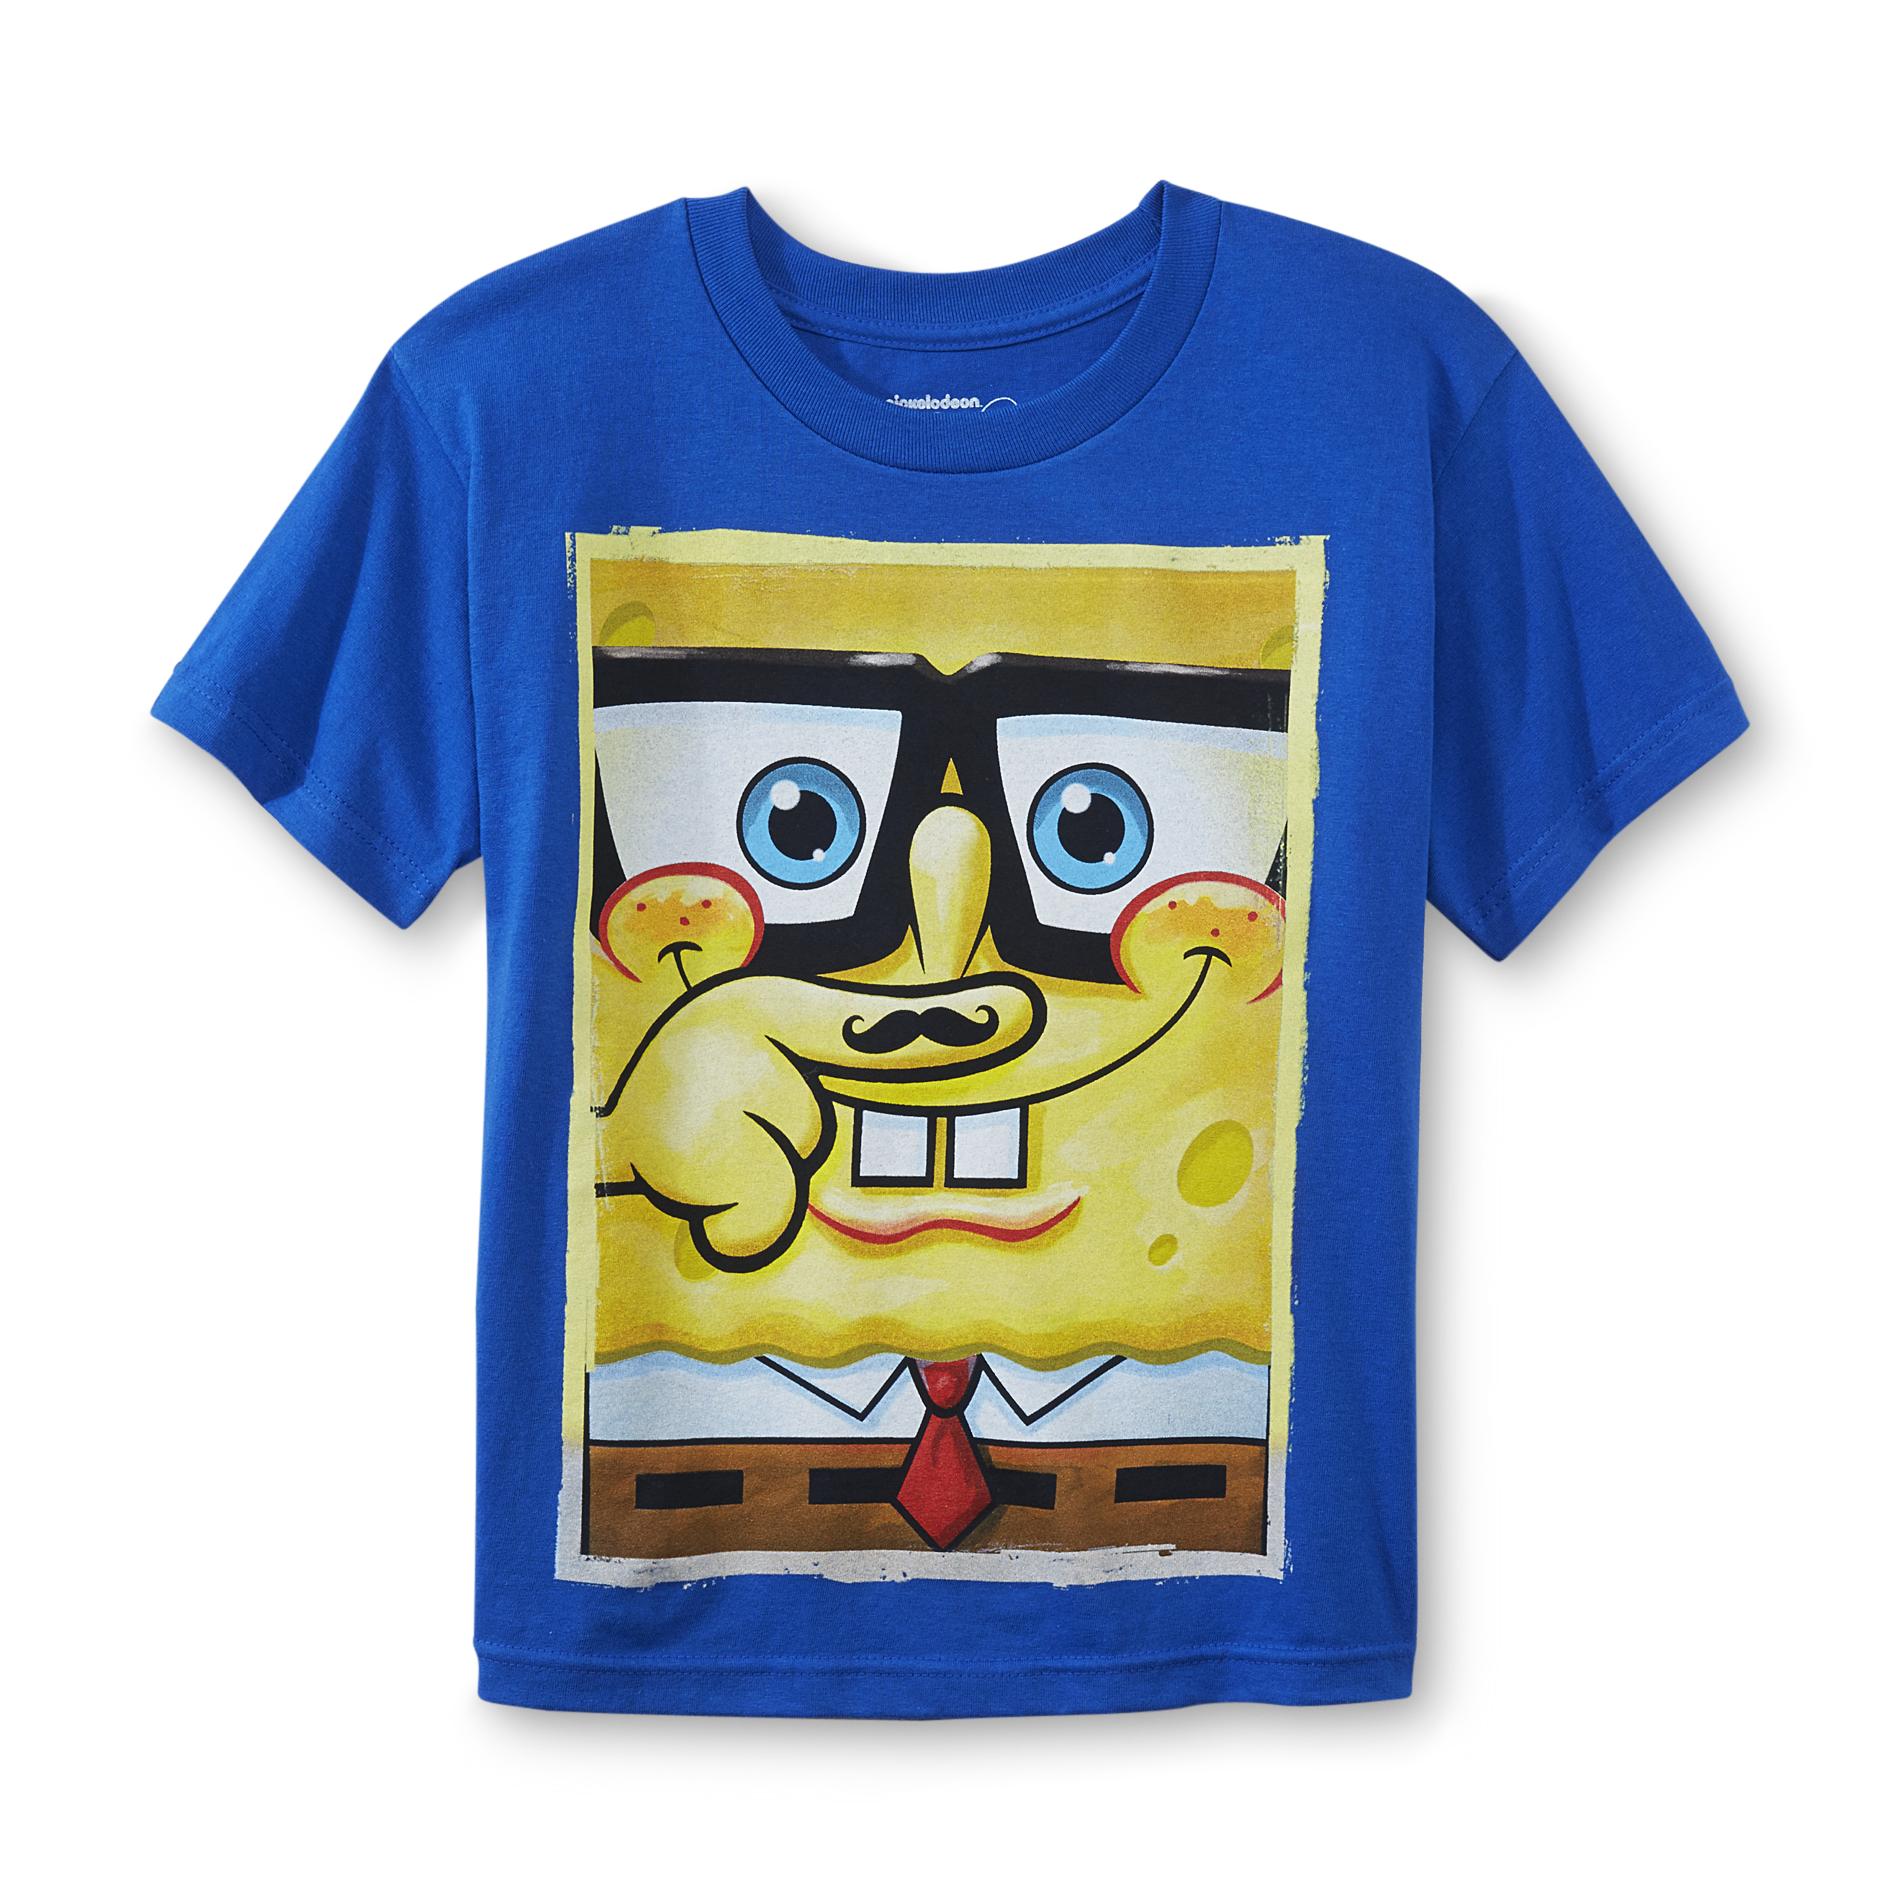 Nickelodeon Boy's Graphic T-Shirt - SpongeBob SquarePants